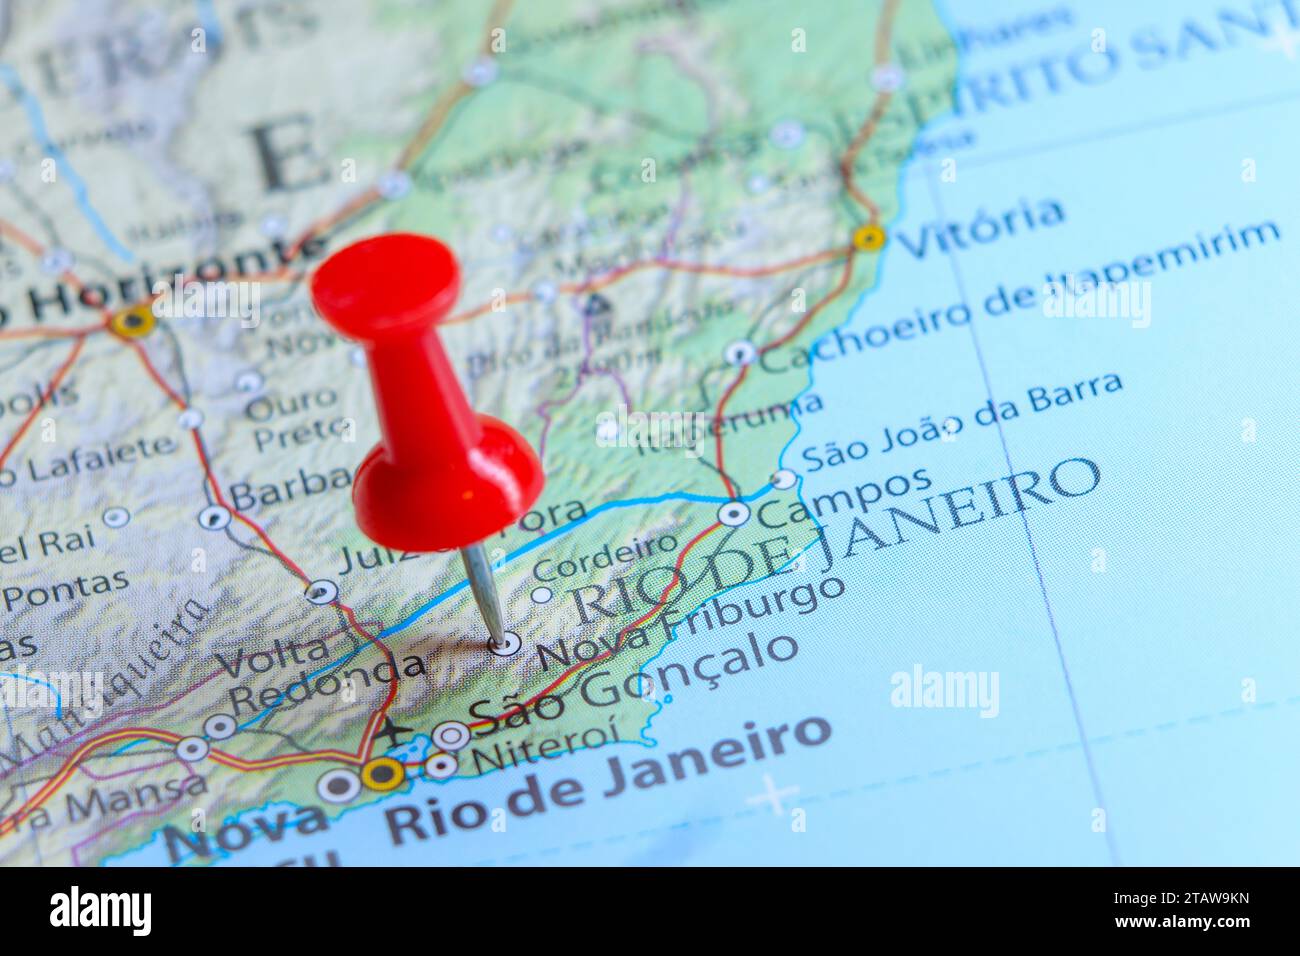 Nova Friburgo, Brazil pin on map Stock Photo